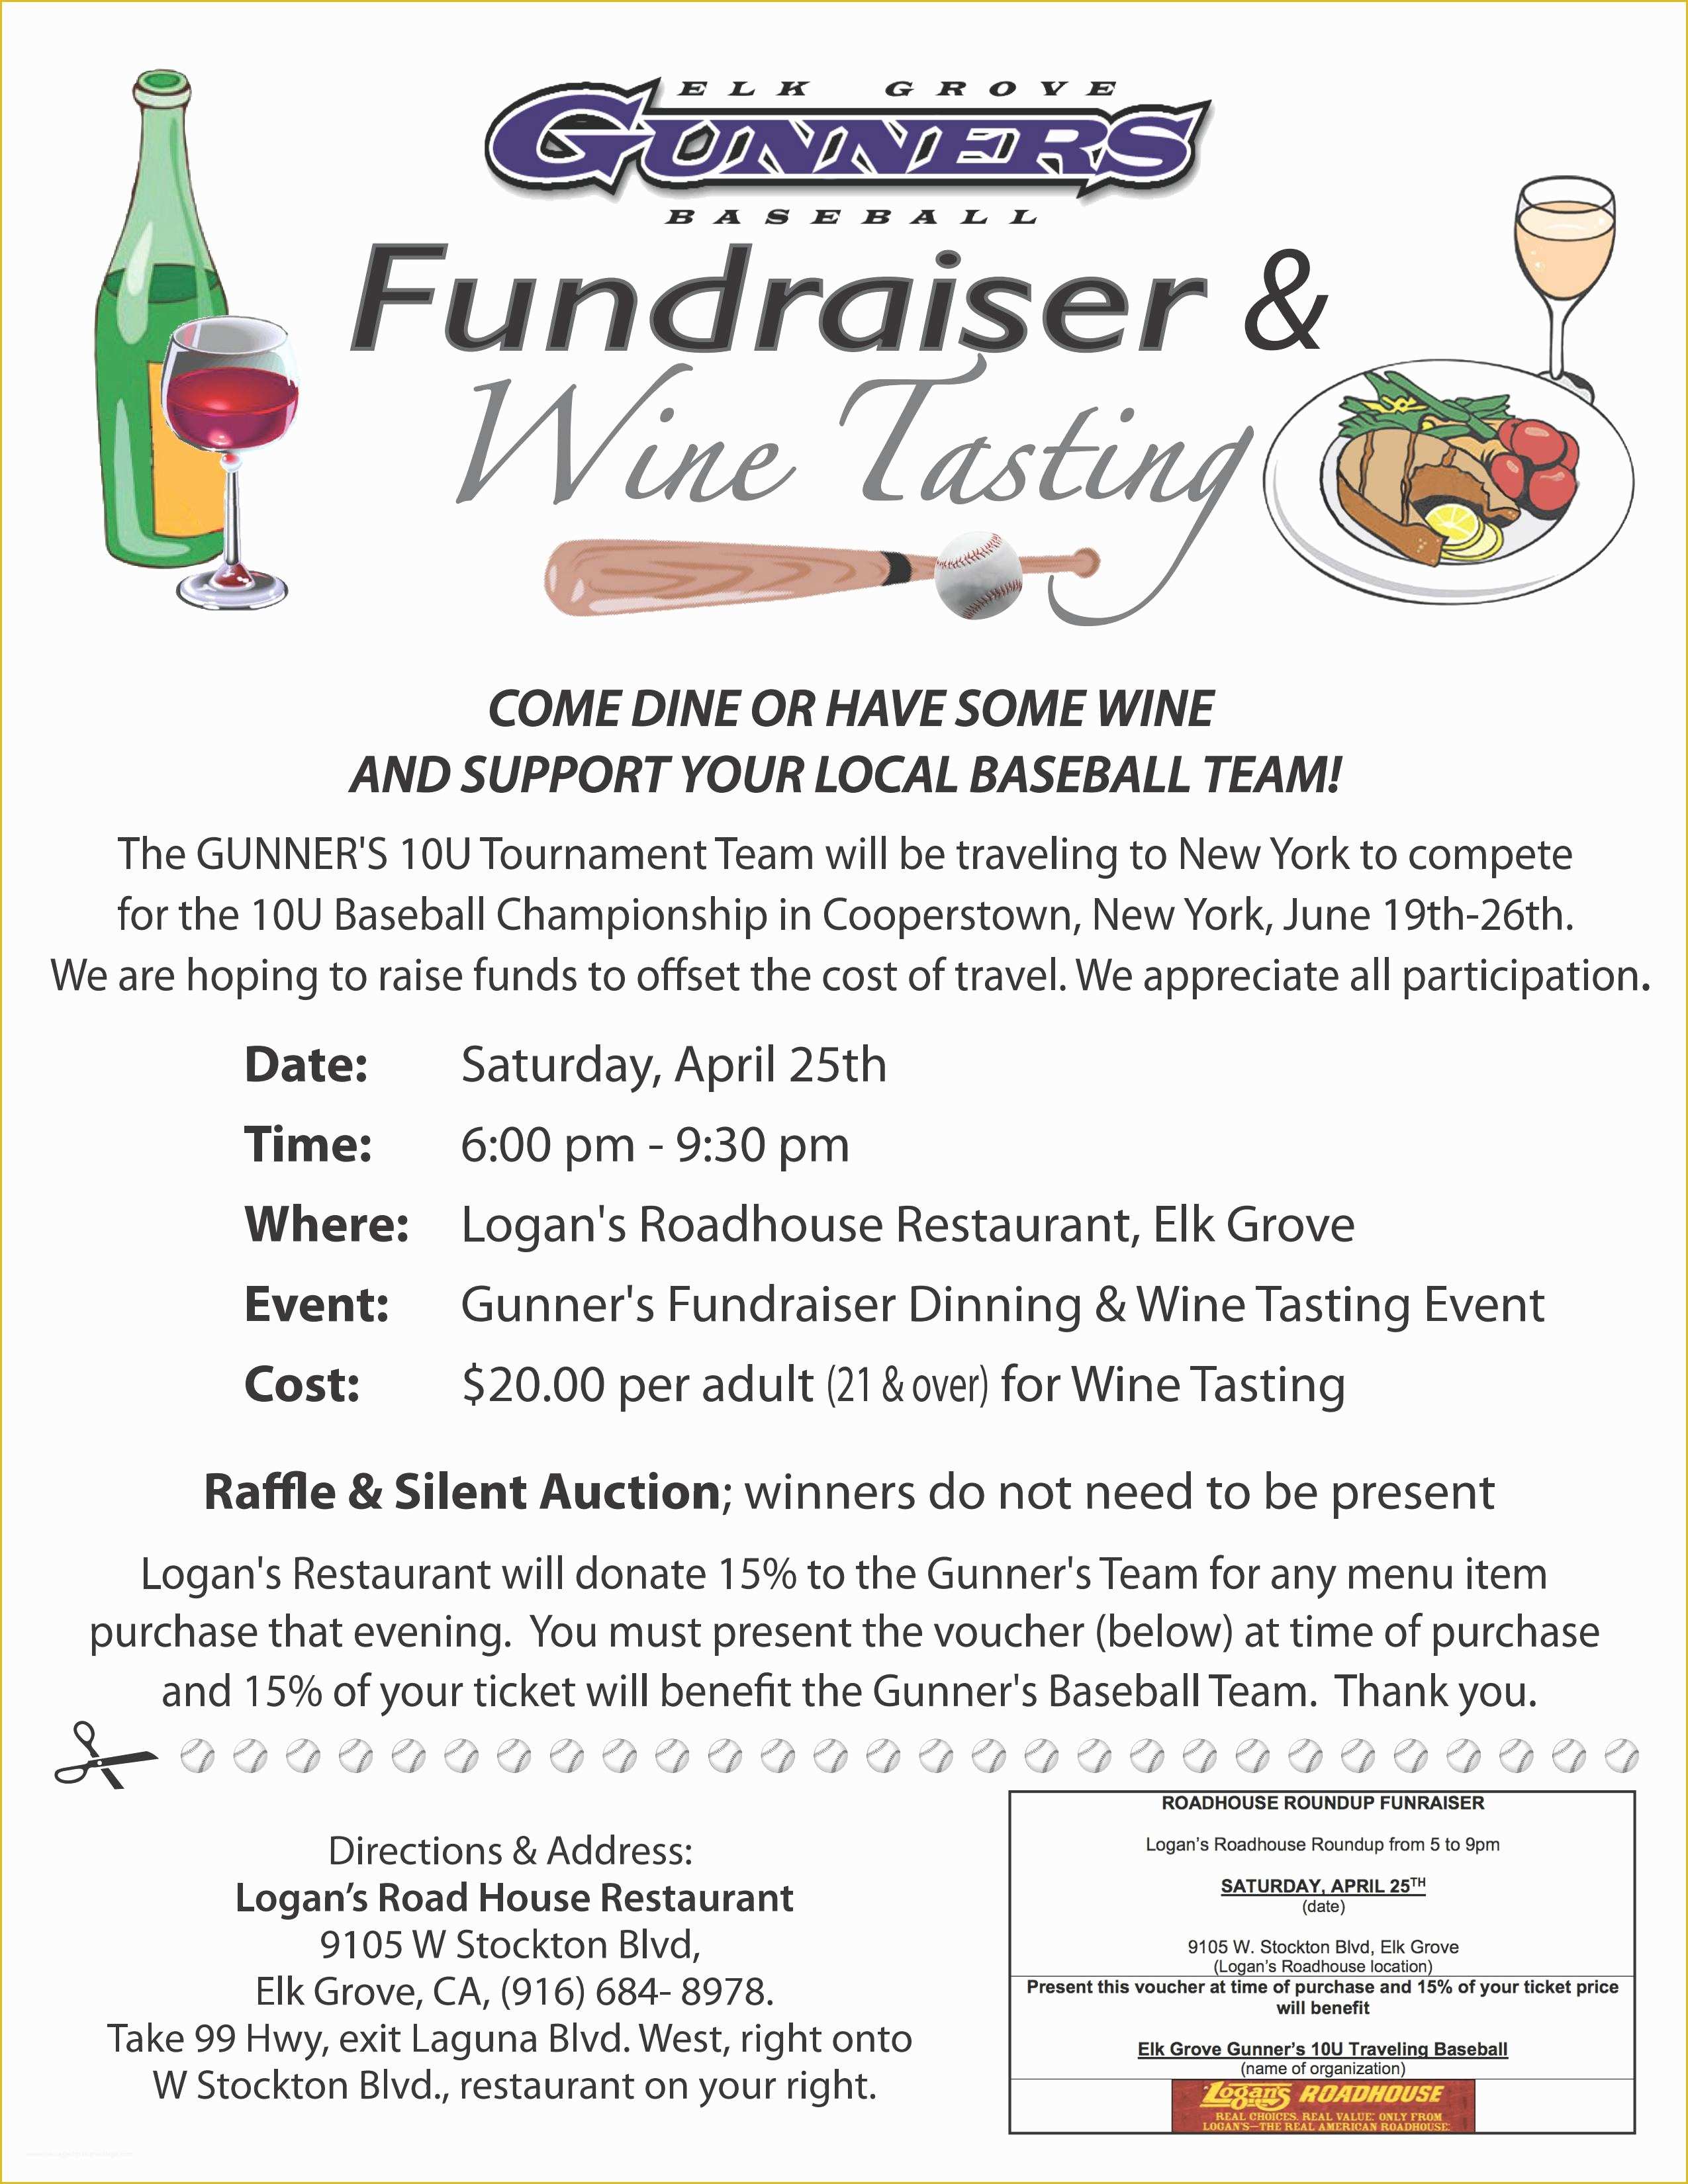 Fundraiser Template Free Of Baseball Fundraiser Flyer Template Yourweek Eca25e